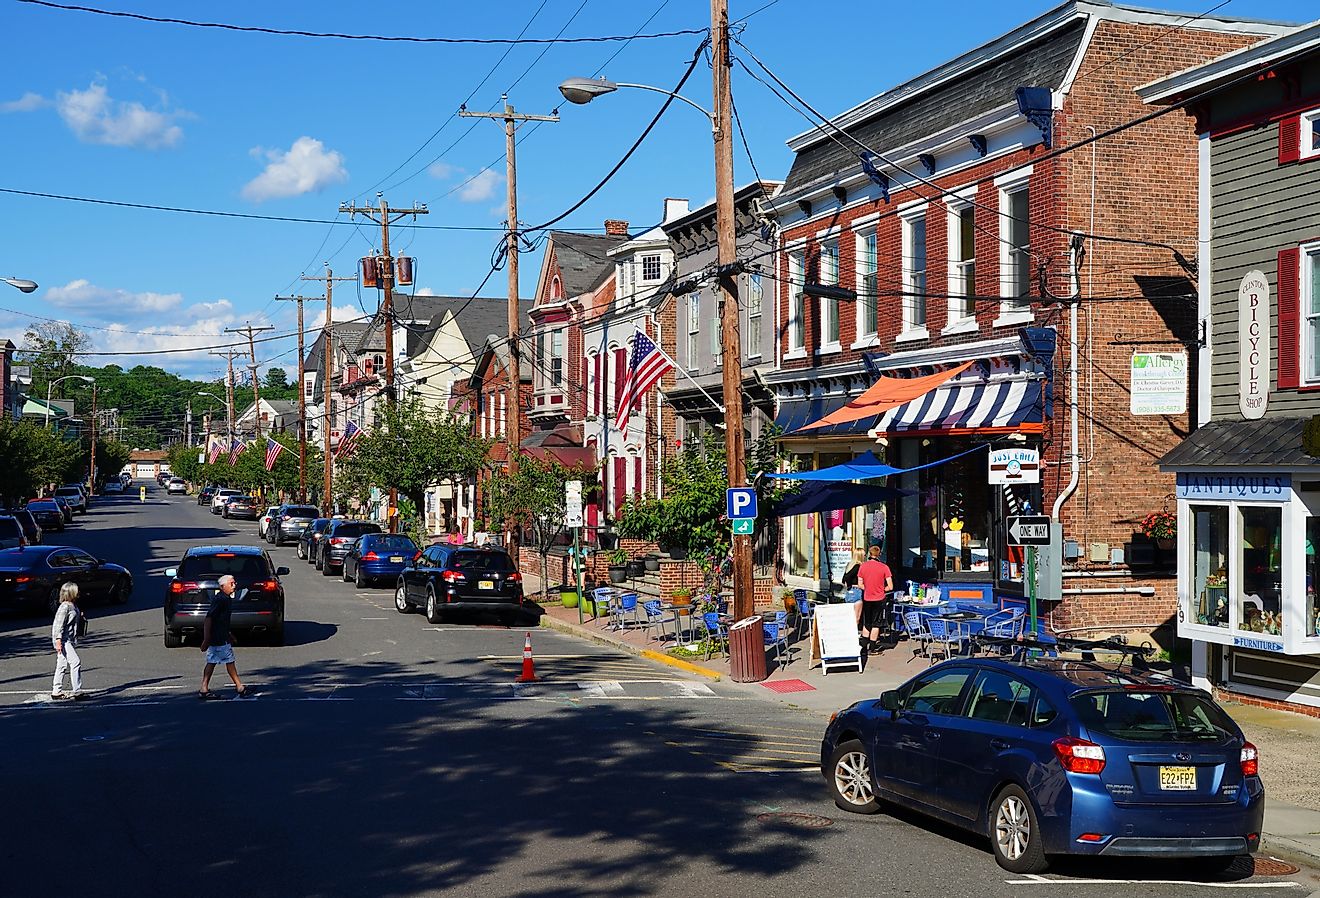 Downtown historic Clinton, Hunterdon County, New Jersey. Image credit EQRoy via Shutterstock